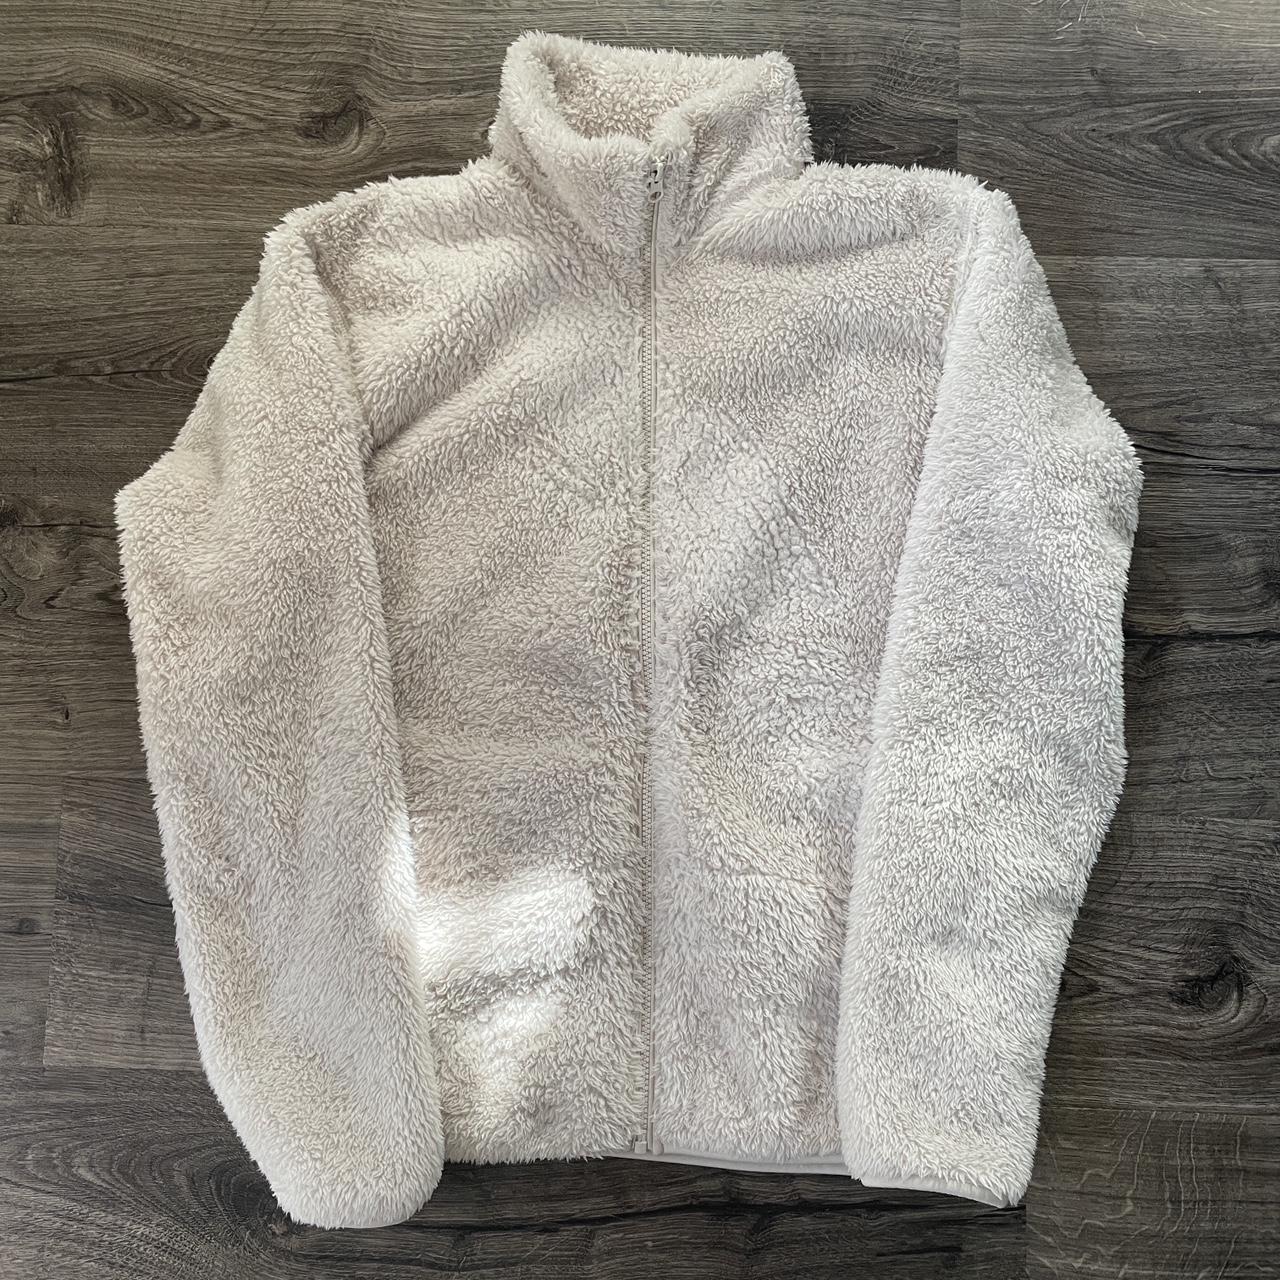 Uniqlo Fluffy Yarn Fleece Jacket Mens Medium 23”... - Depop